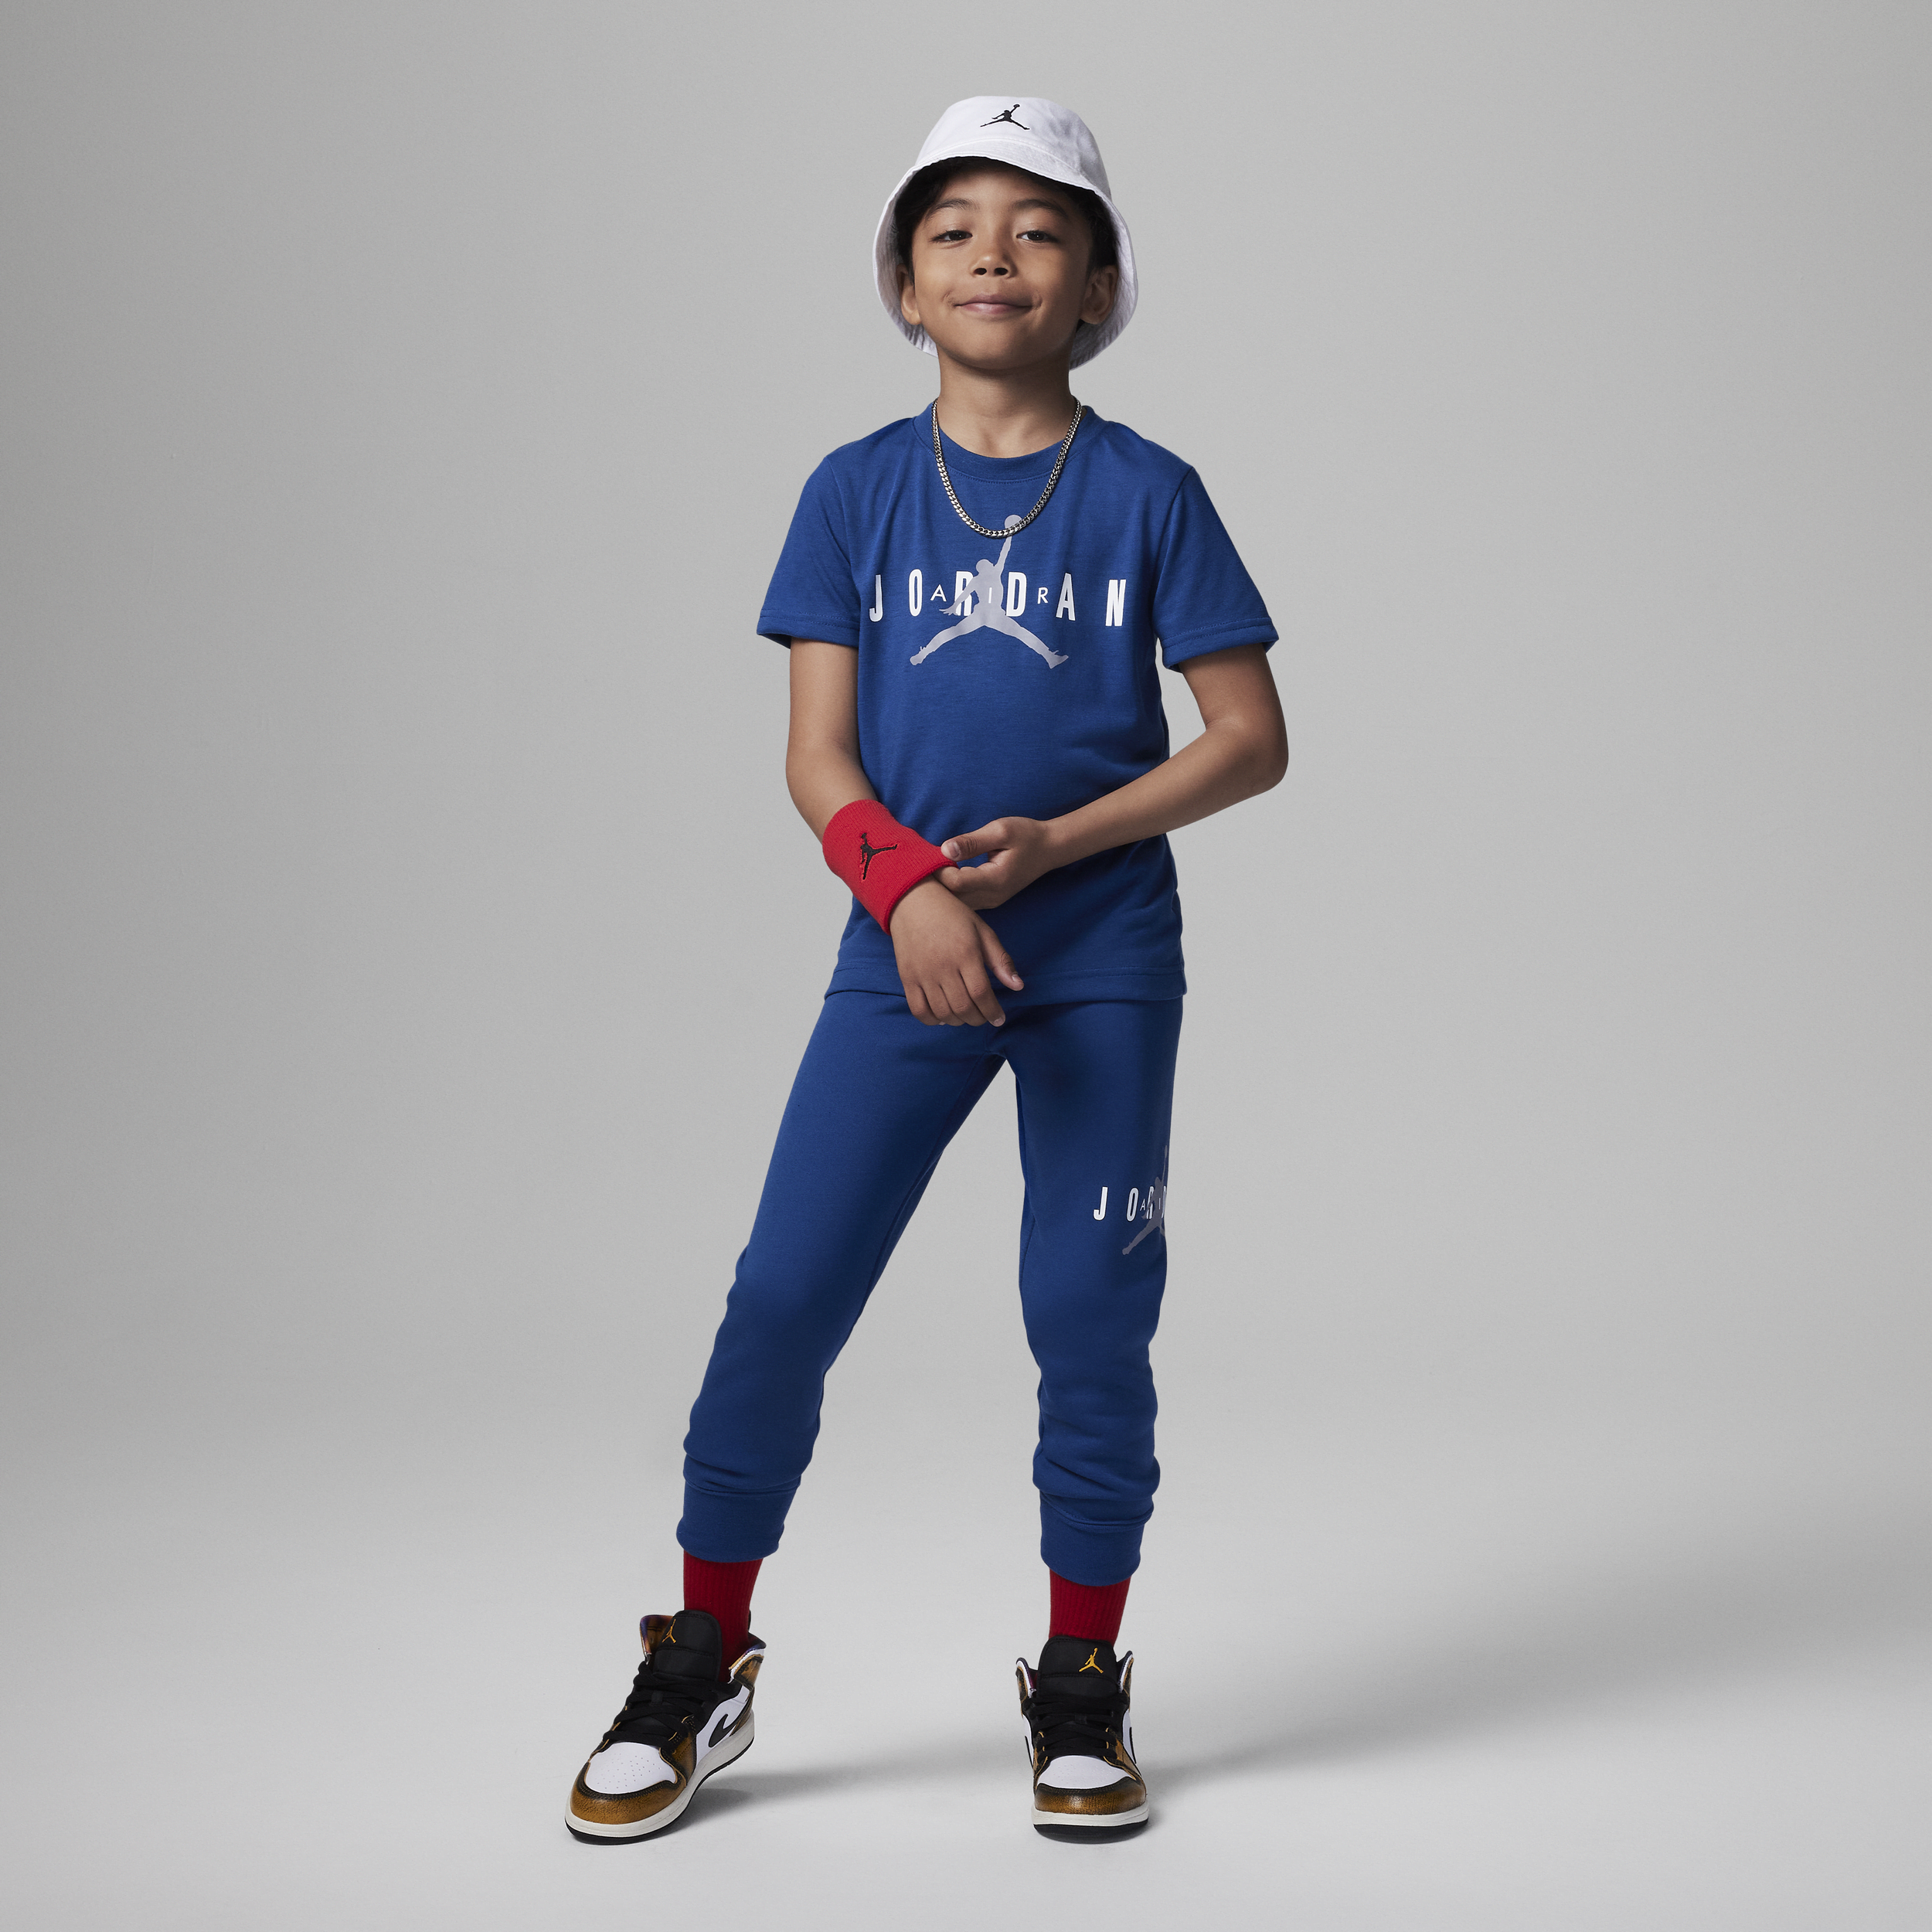 Jordan Conjunto de pantalón sostenible Jumpman - Niño/a pequeño/a - Azul